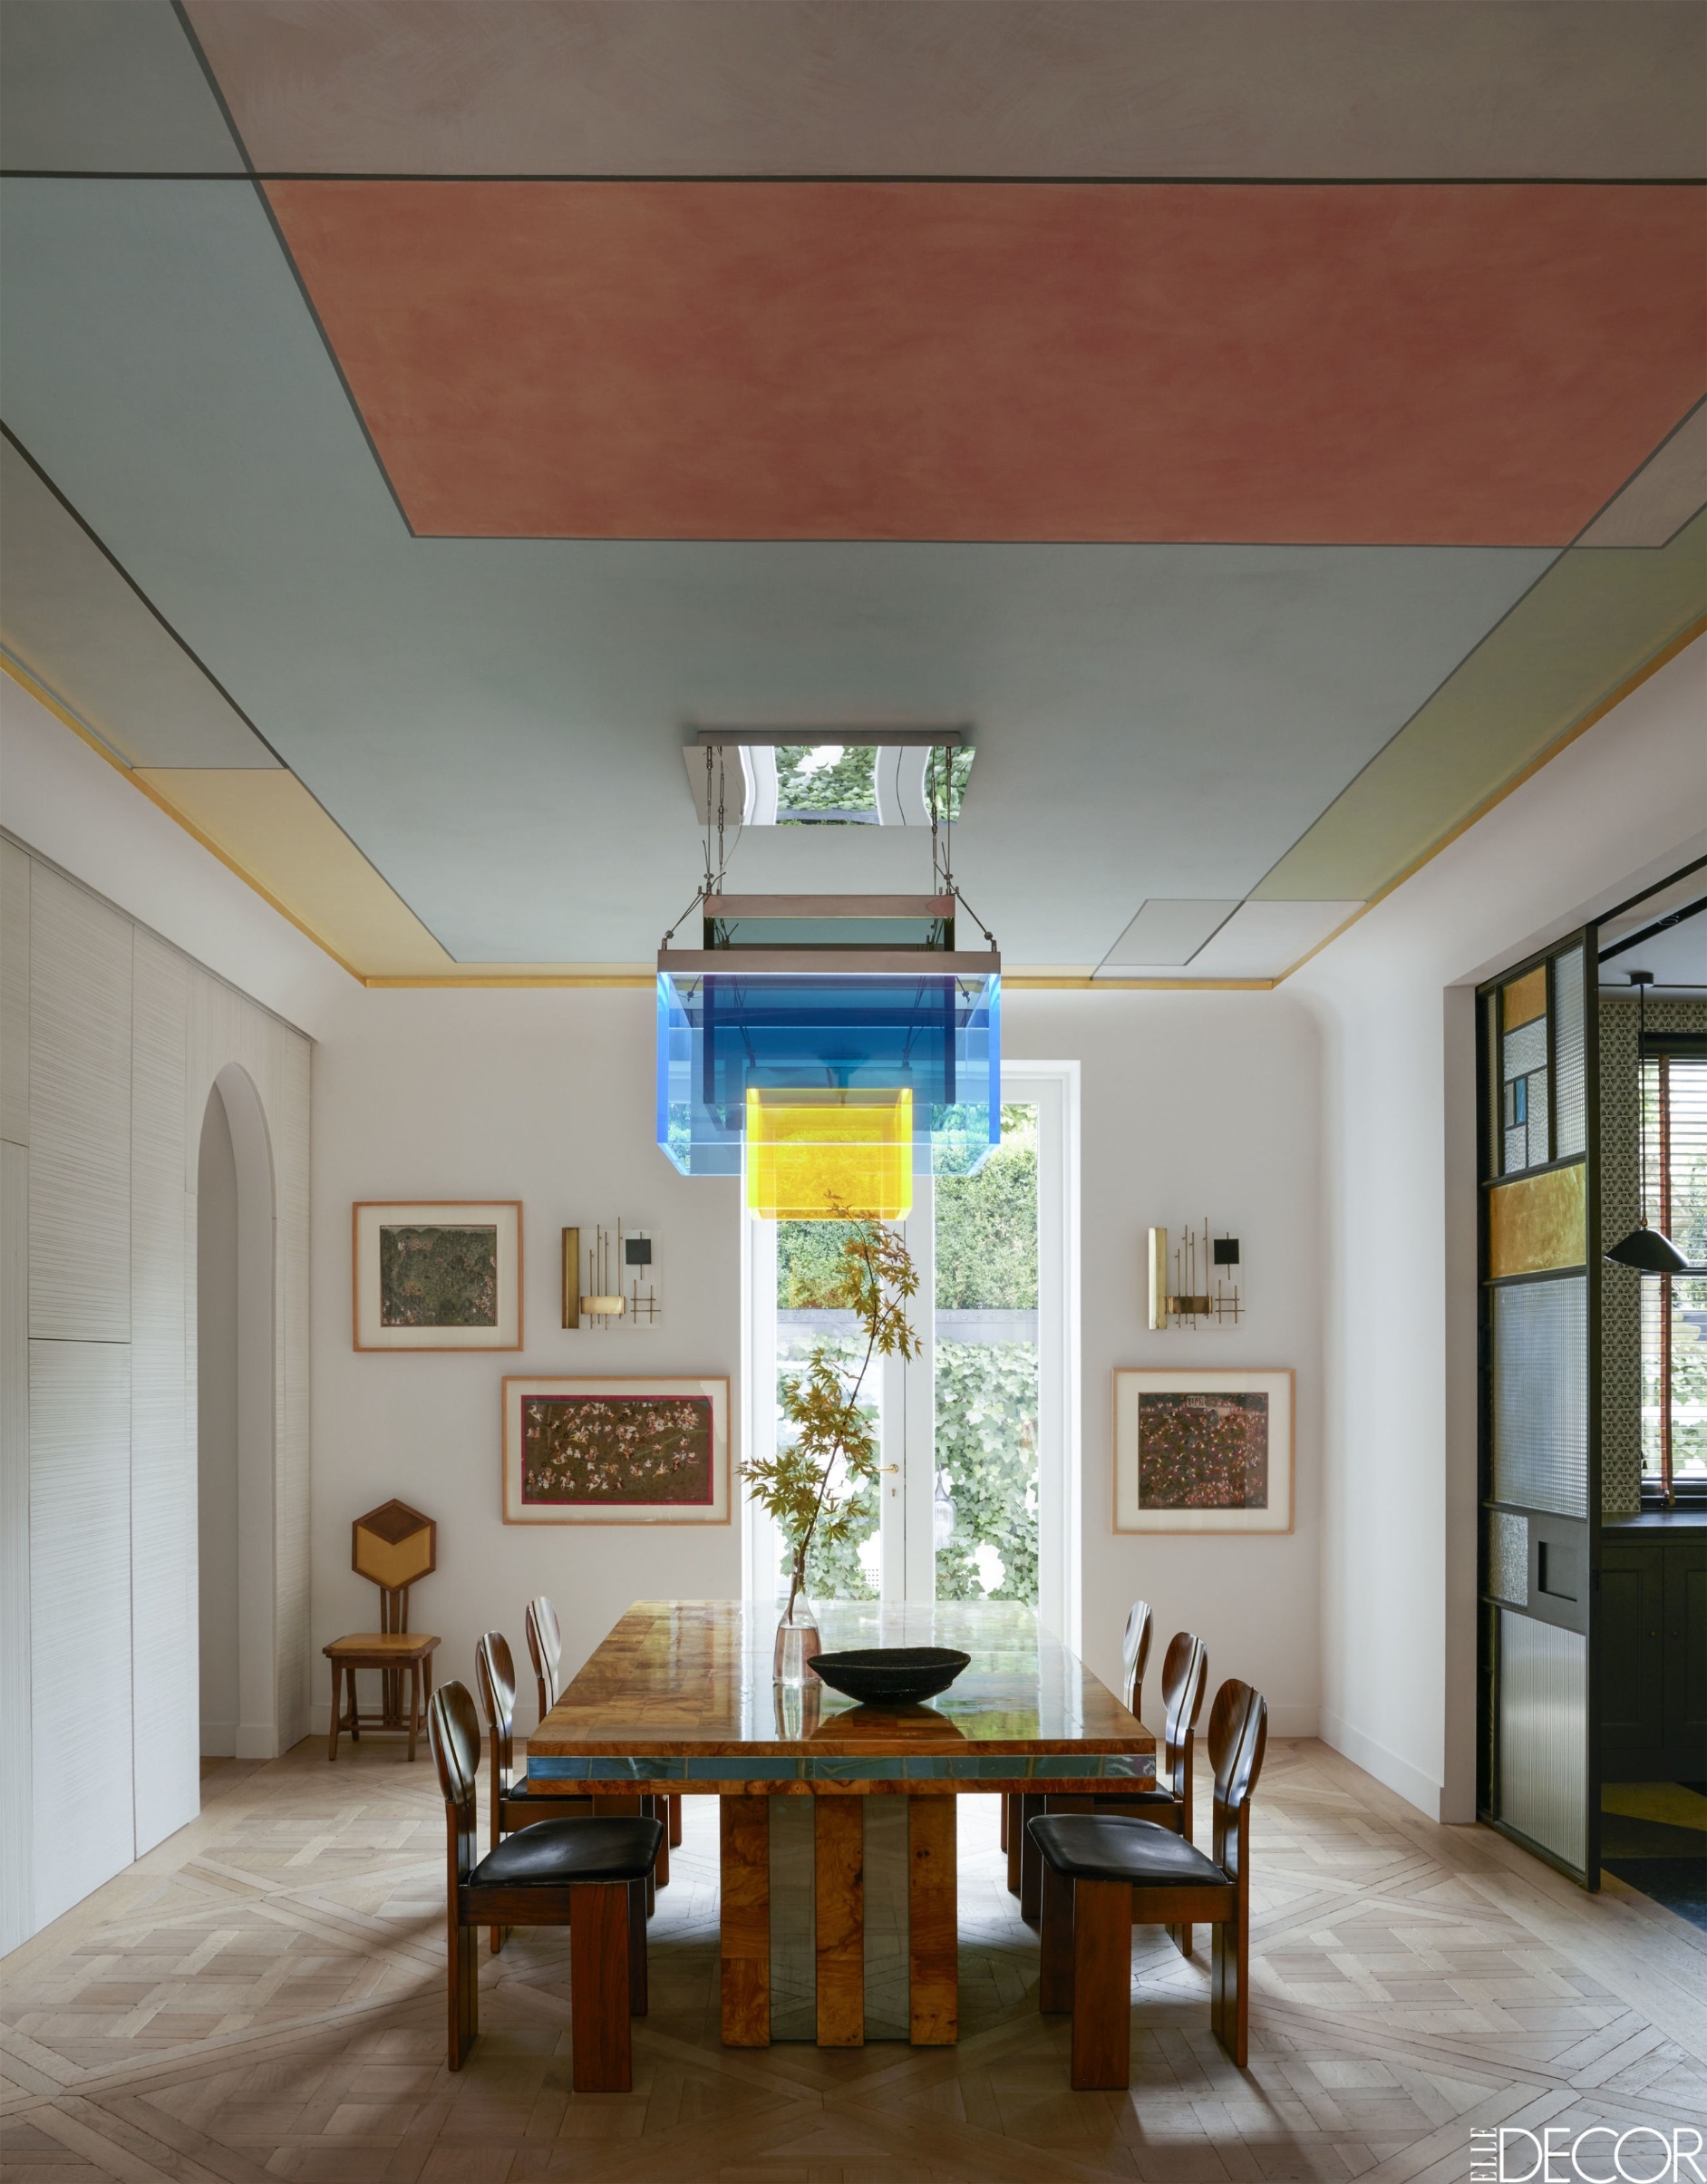 ESSENTIAL HOME BEAUTIFUL HOME IDEAS CEILING BEAUTIFUL CEILING IDEAS ceiling ideas london townhouse 1490116931